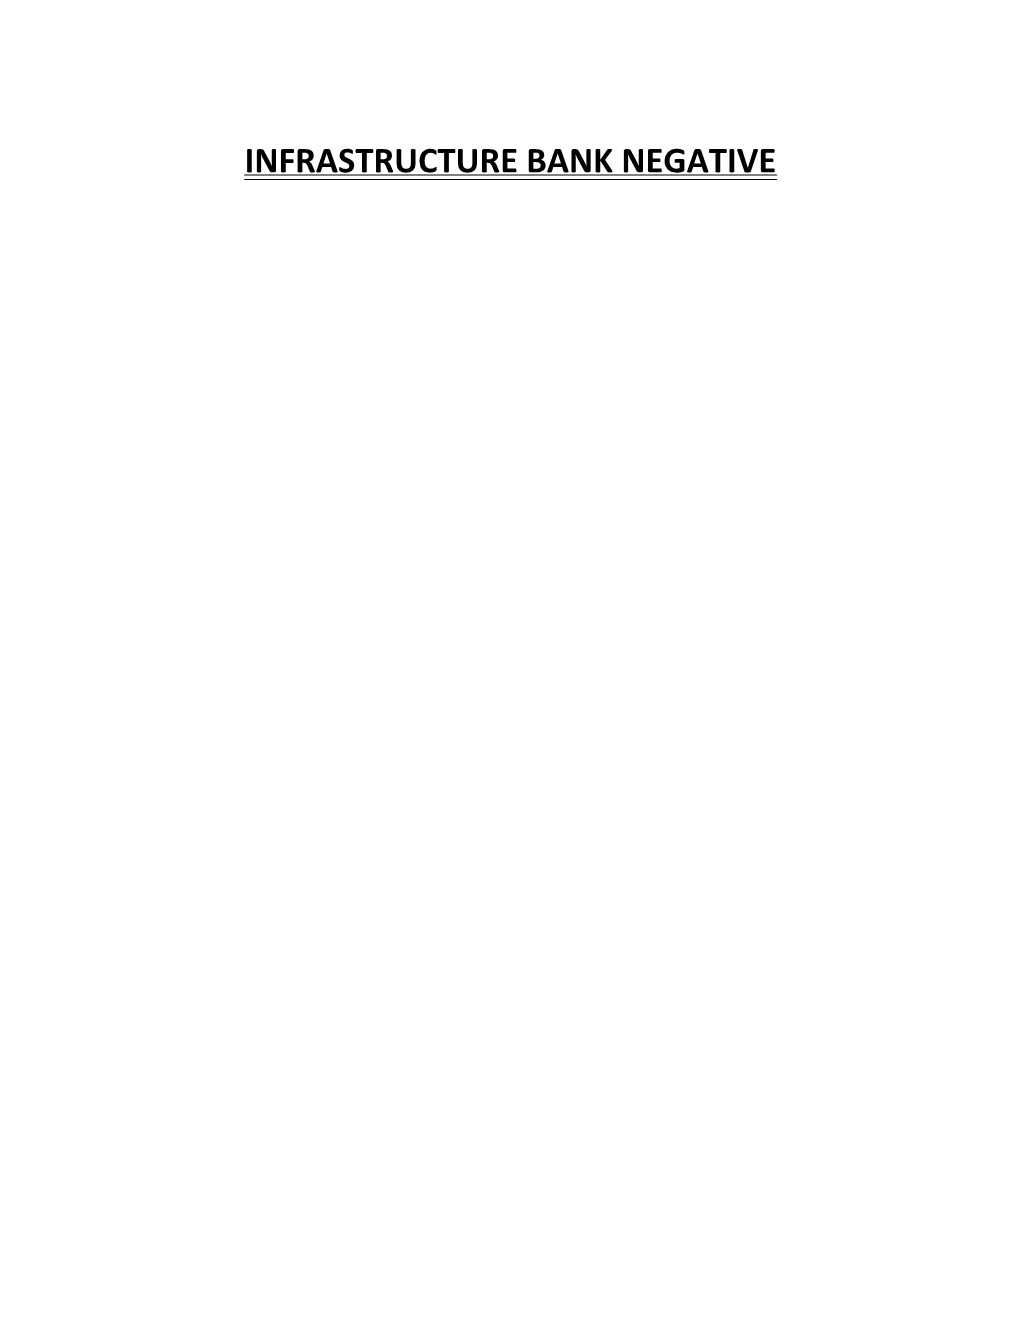 Infrastructure Bank Negative